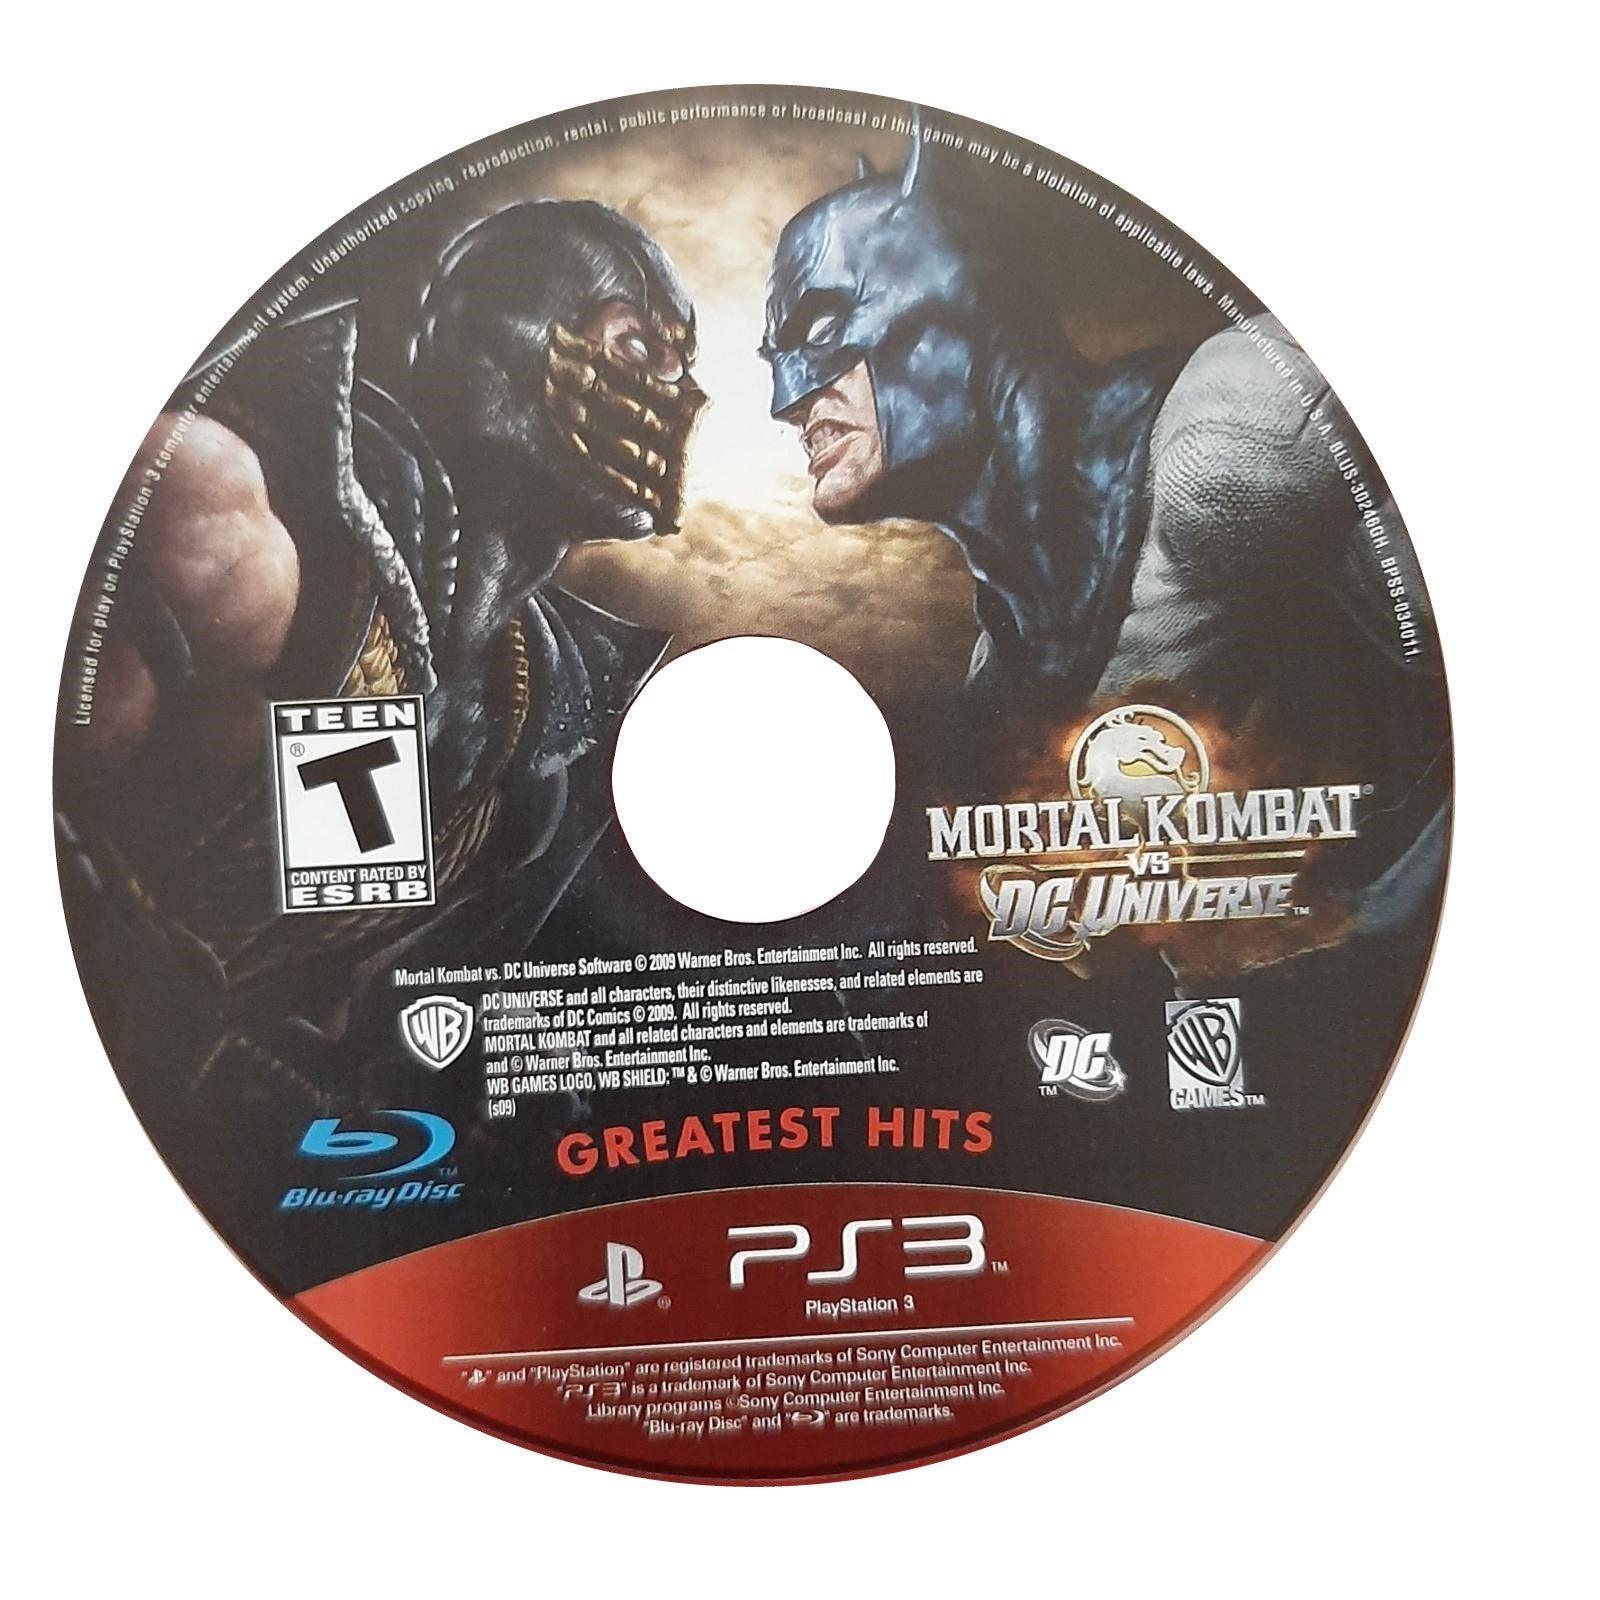 Mortal Kombat vs. DC Universe (Greatest Hits) - PlayStation 3 (PS3) Game